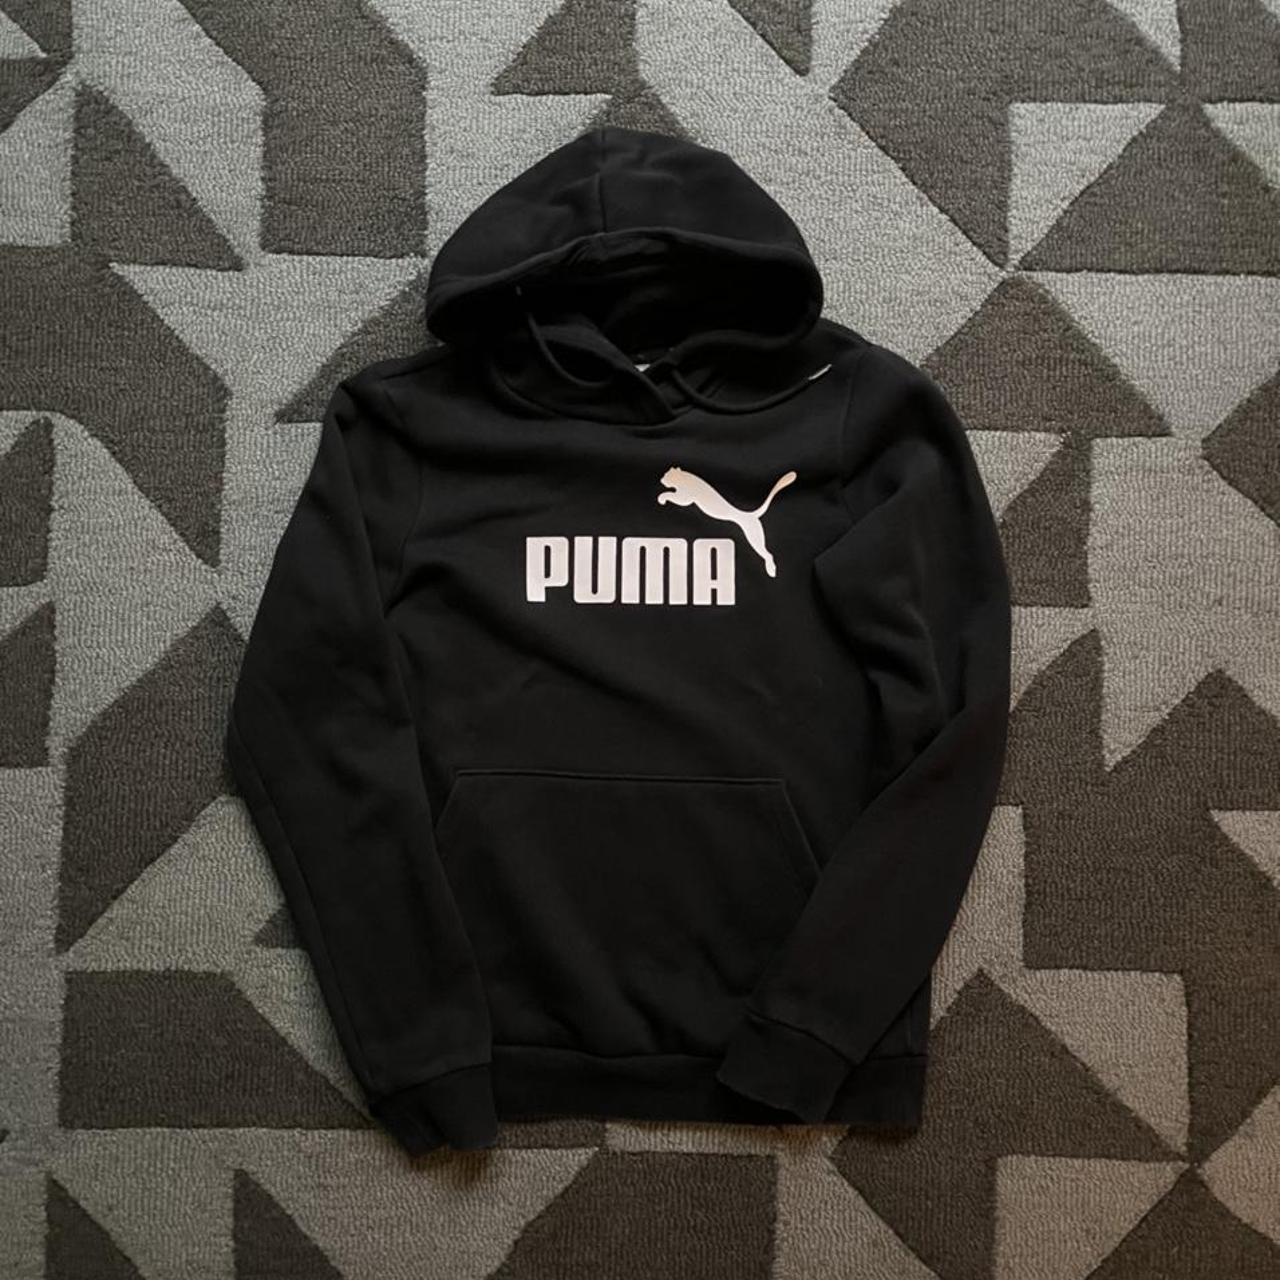 Puma Women's Black and White Hoodie | Depop